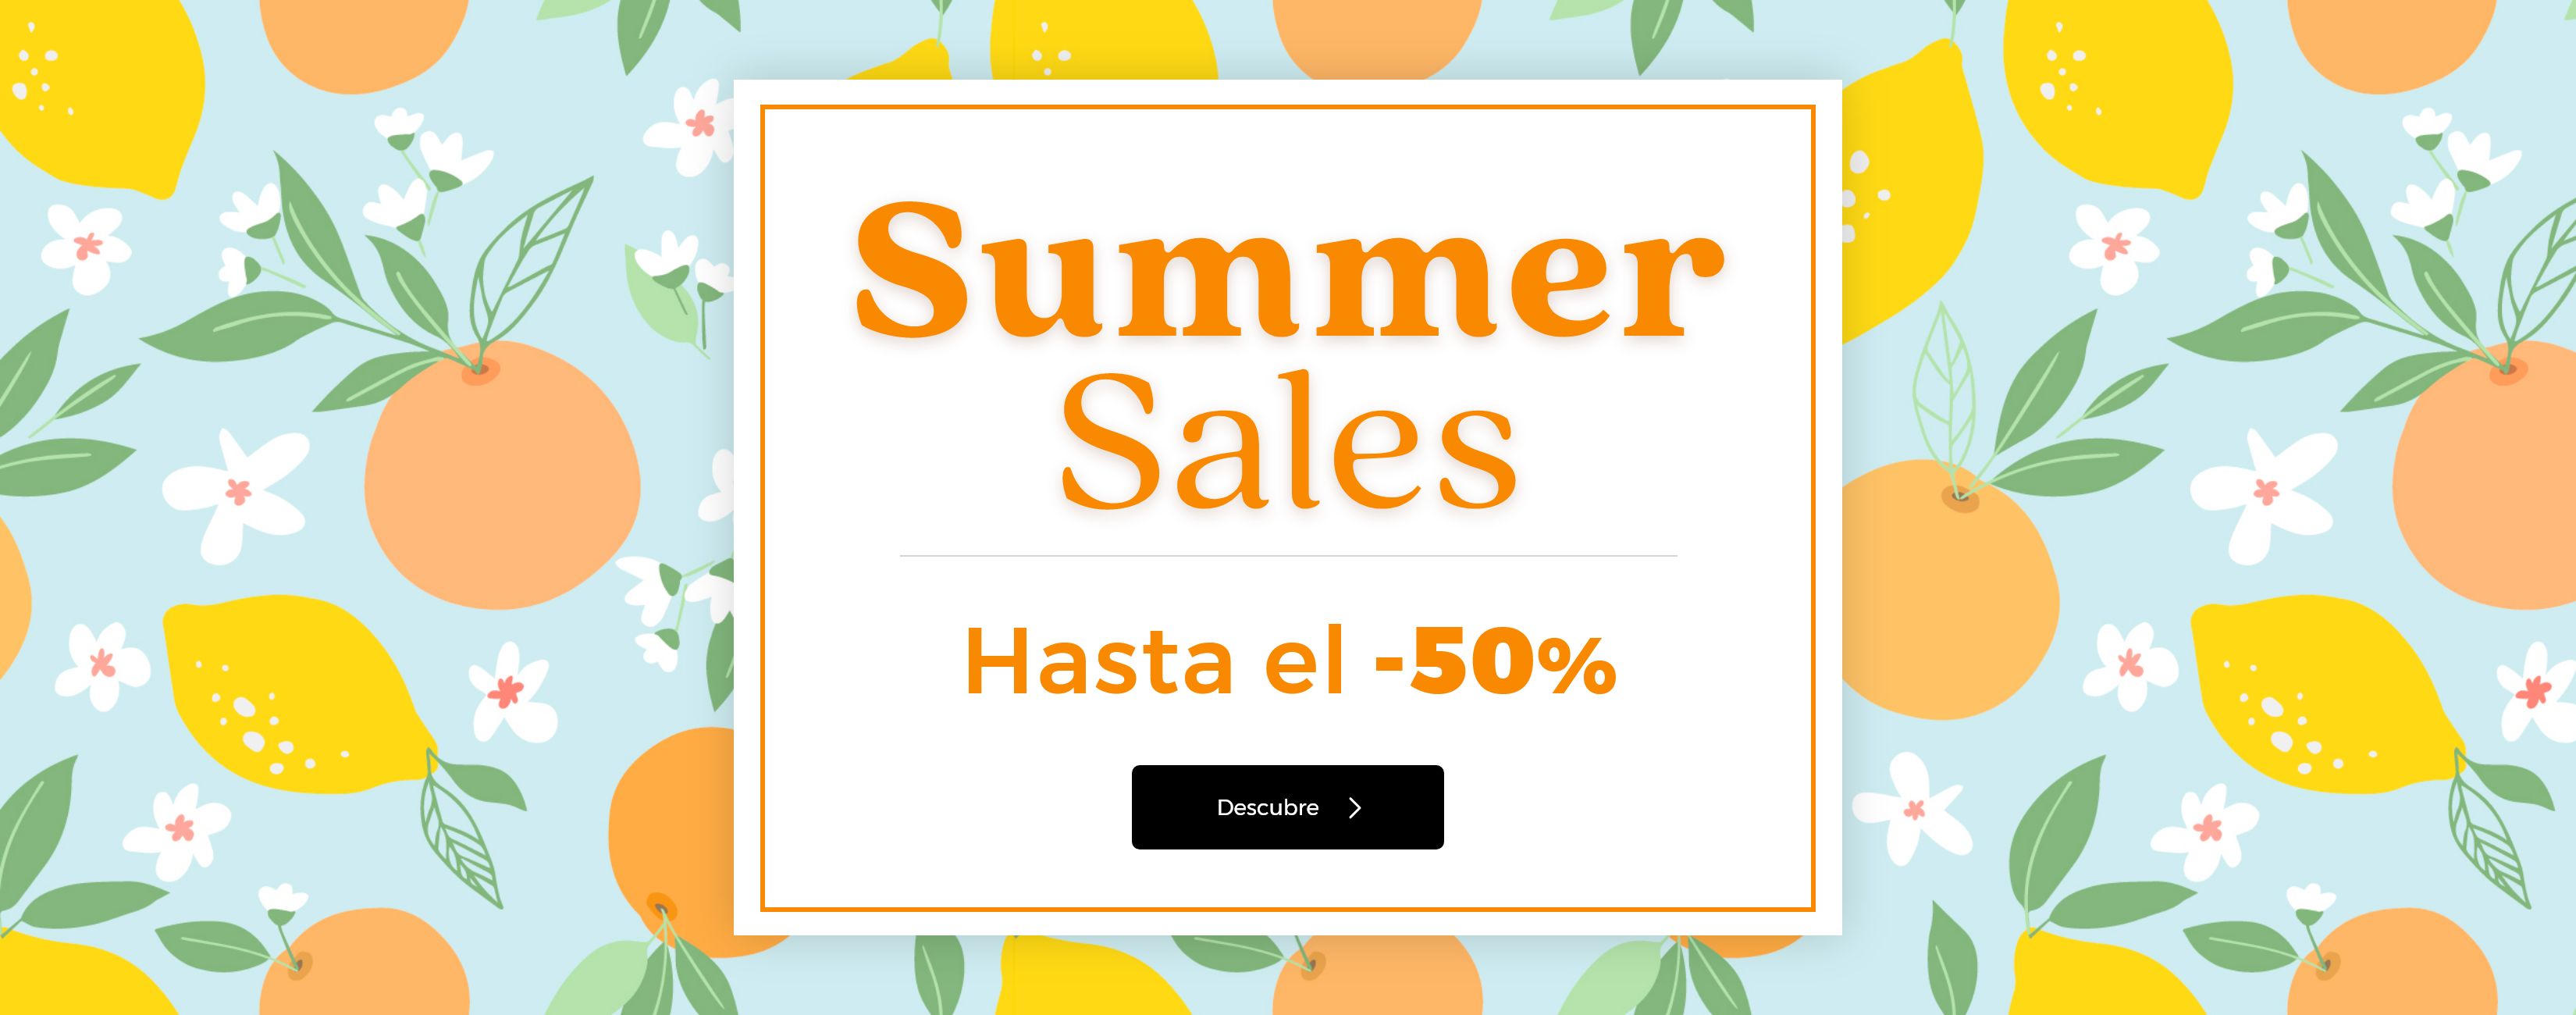 SUMMER SALES HASTA -50% EXPIRA EL 31.07